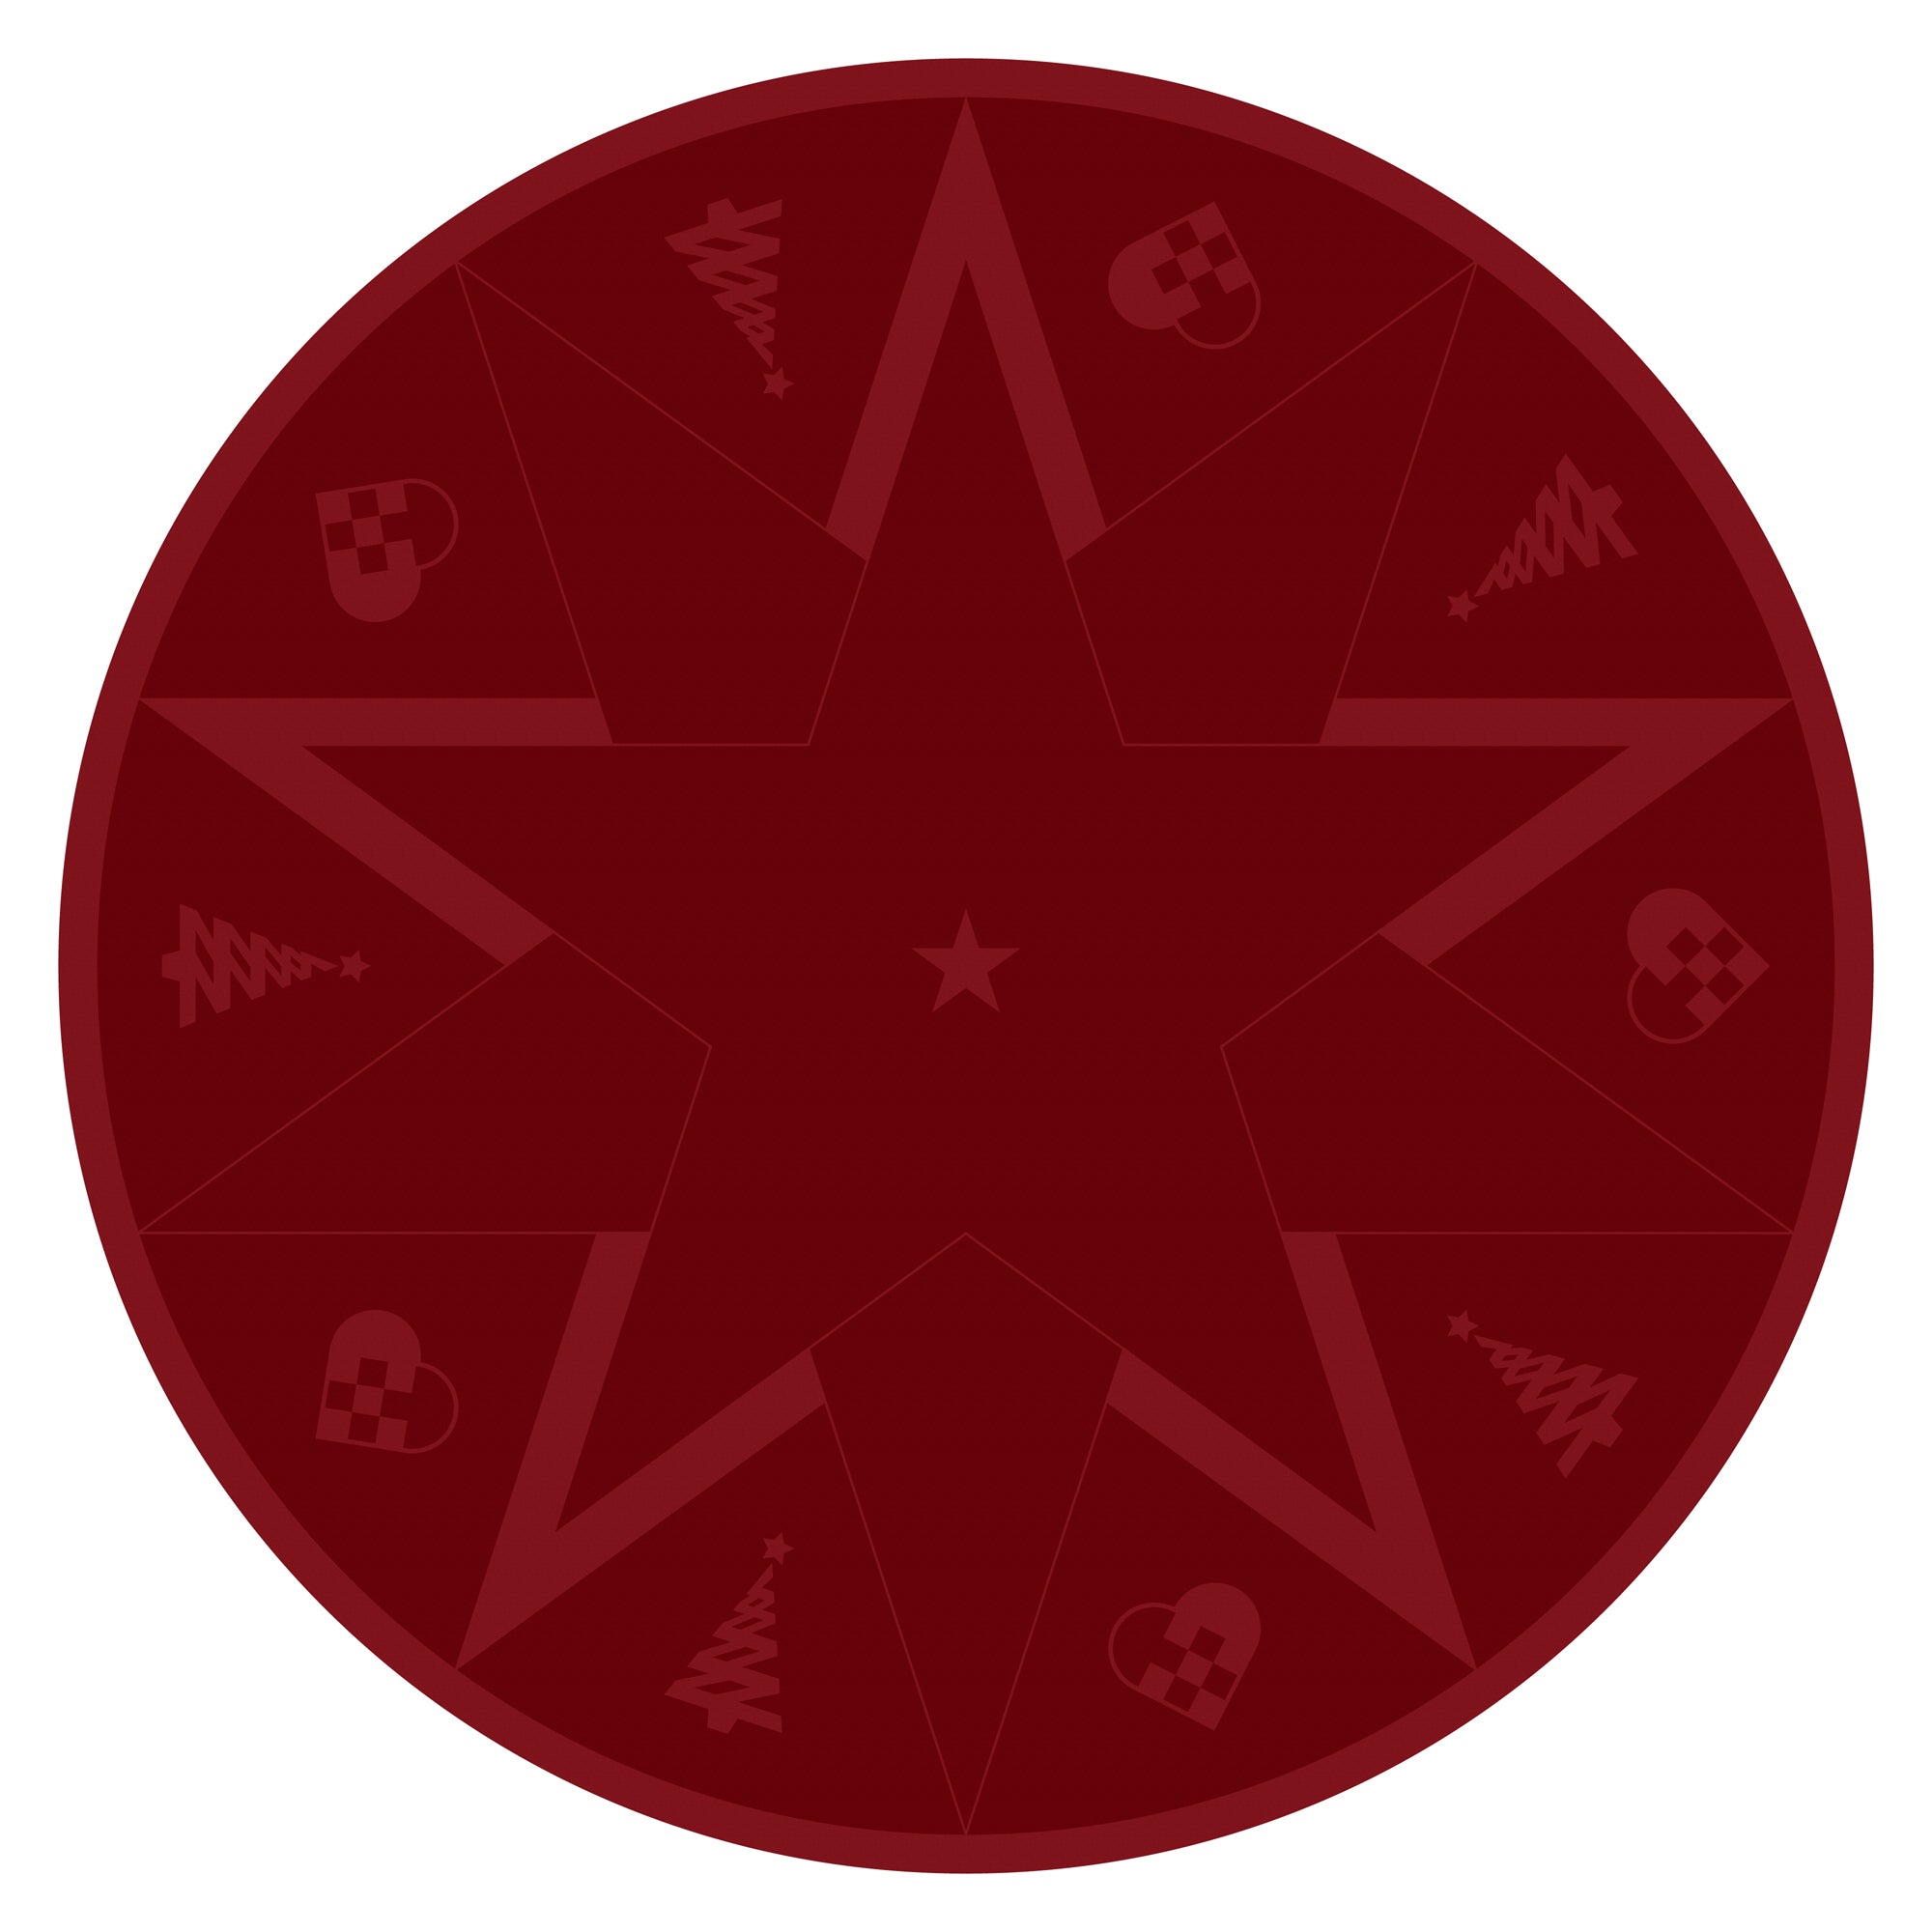 STARS Christmas tree rug - advent red